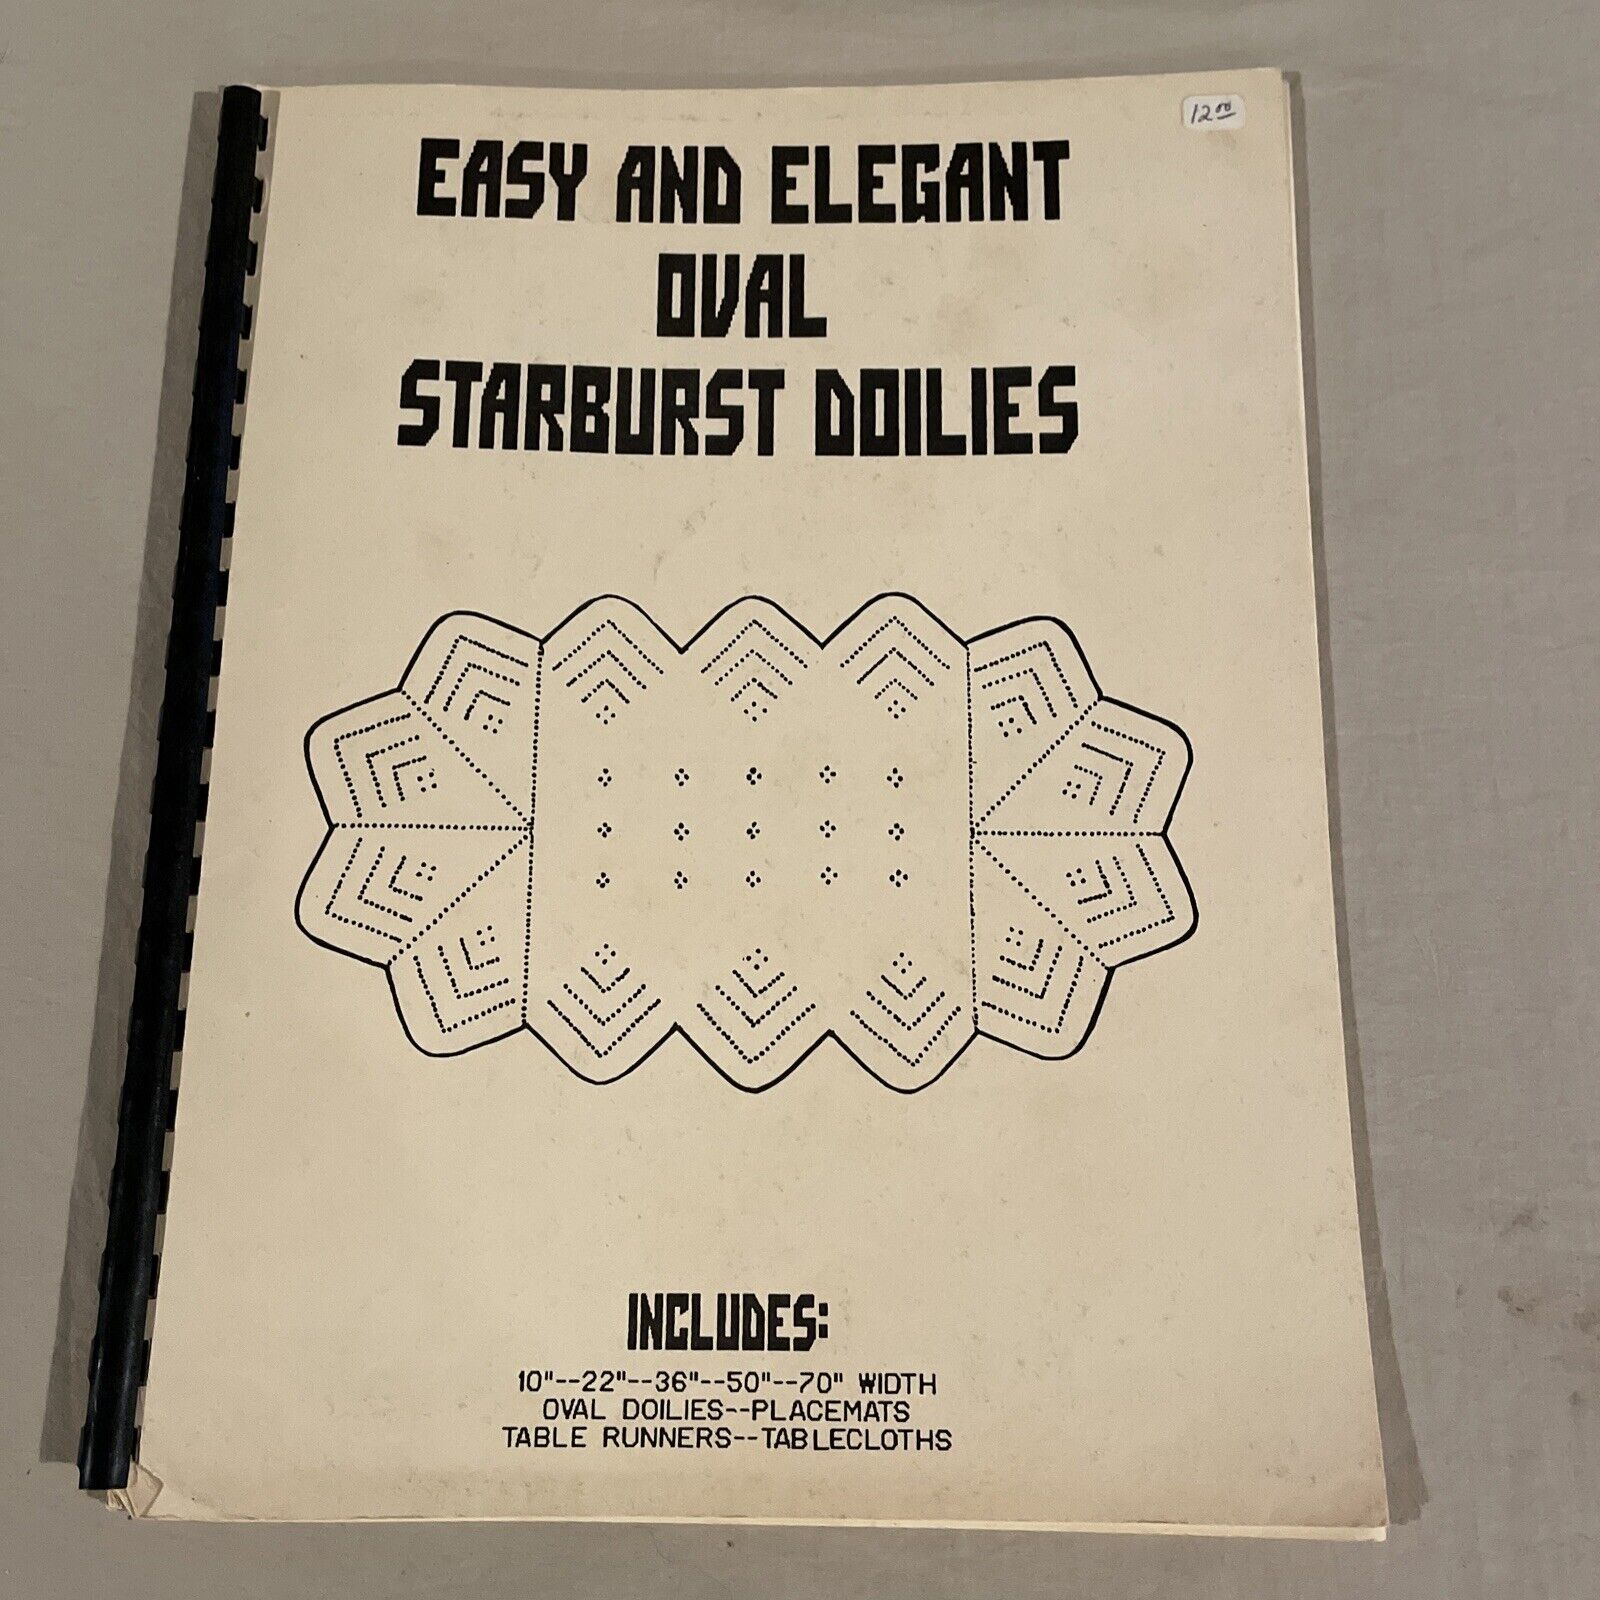 Easy & Zelegsnt Oval Starburst Doilies Knitting Machine Patterns